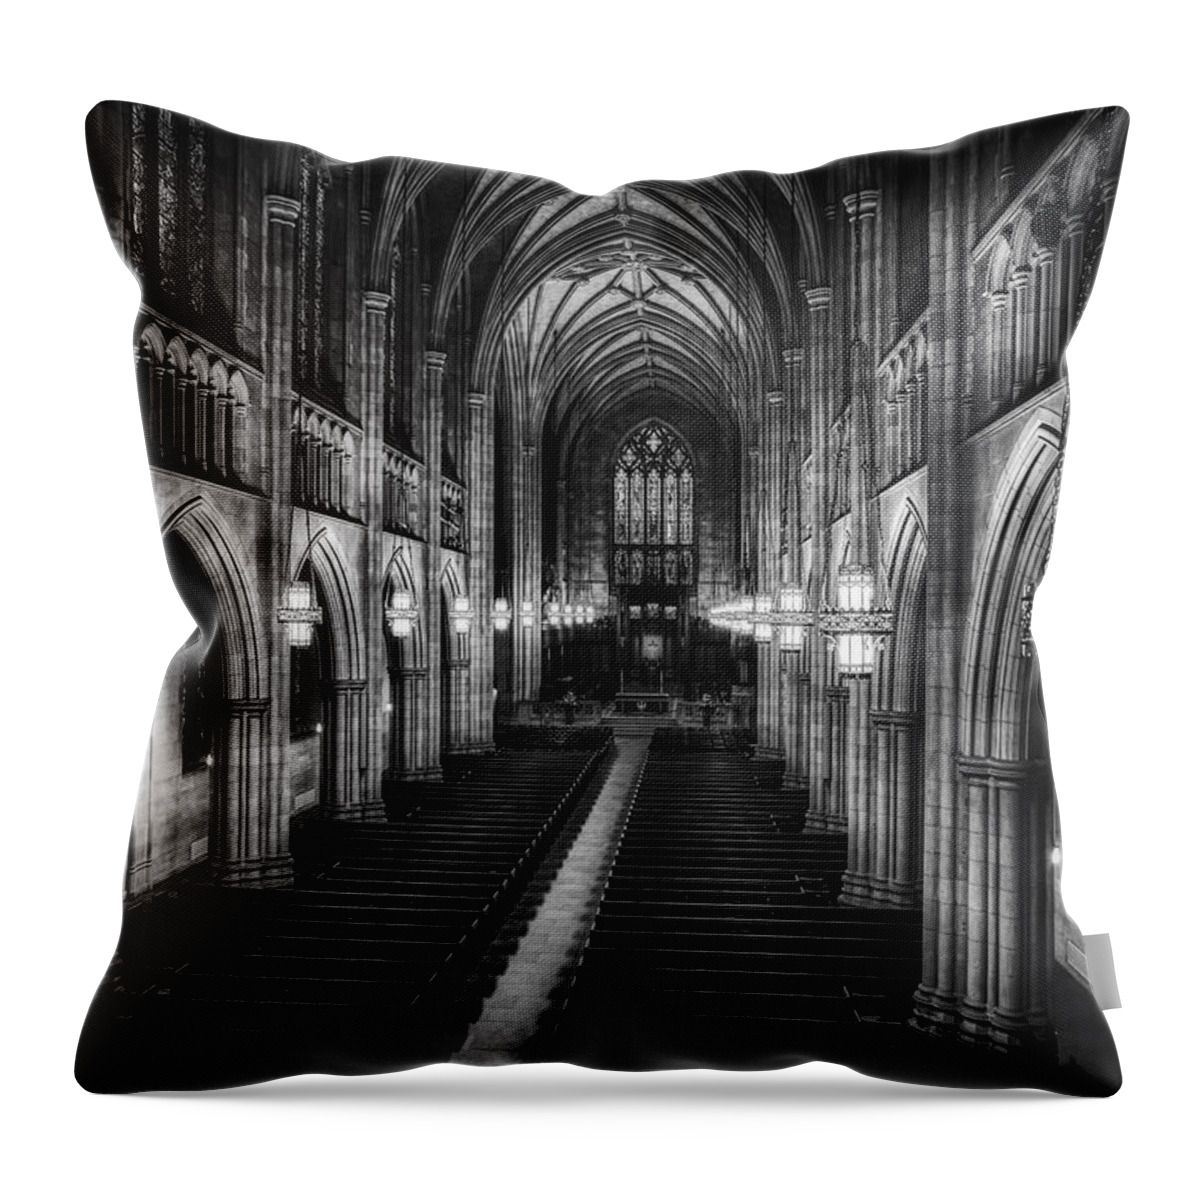 Duke University Throw Pillow featuring the photograph Duke University Chapel Interior #1 by Mountain Dreams